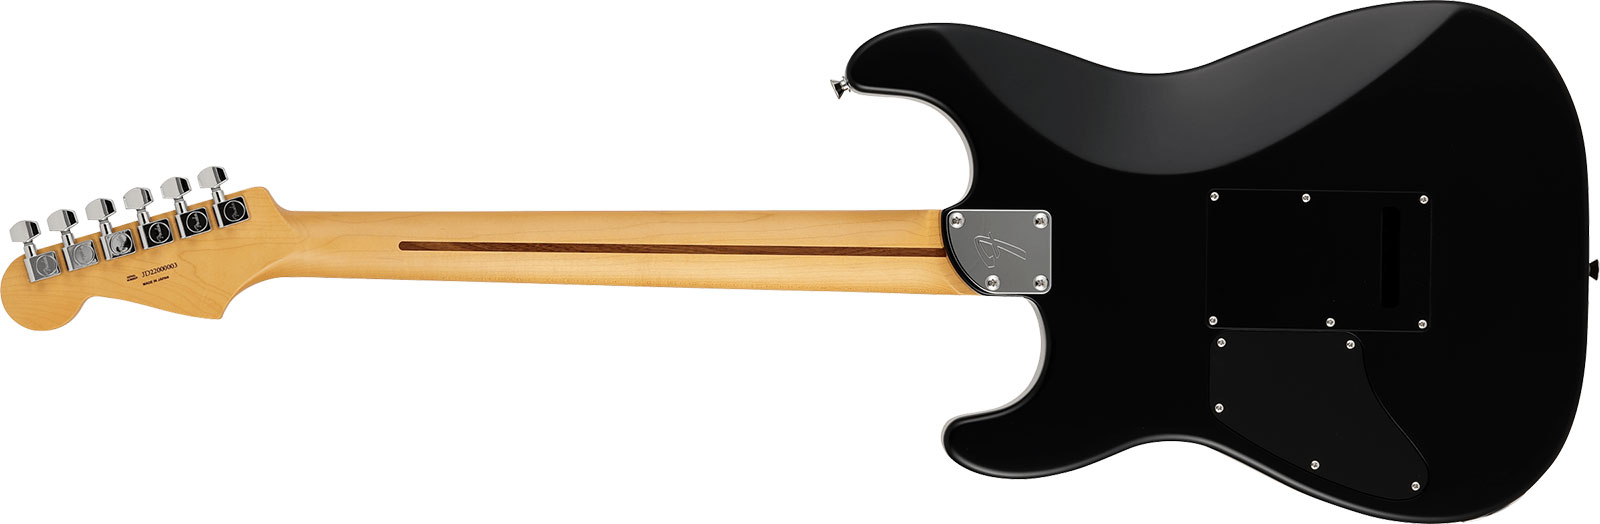 Fender Strat Elemental Mij Jap 2h Trem Rw - Stone Black - Guitare Électrique Forme Str - Variation 1